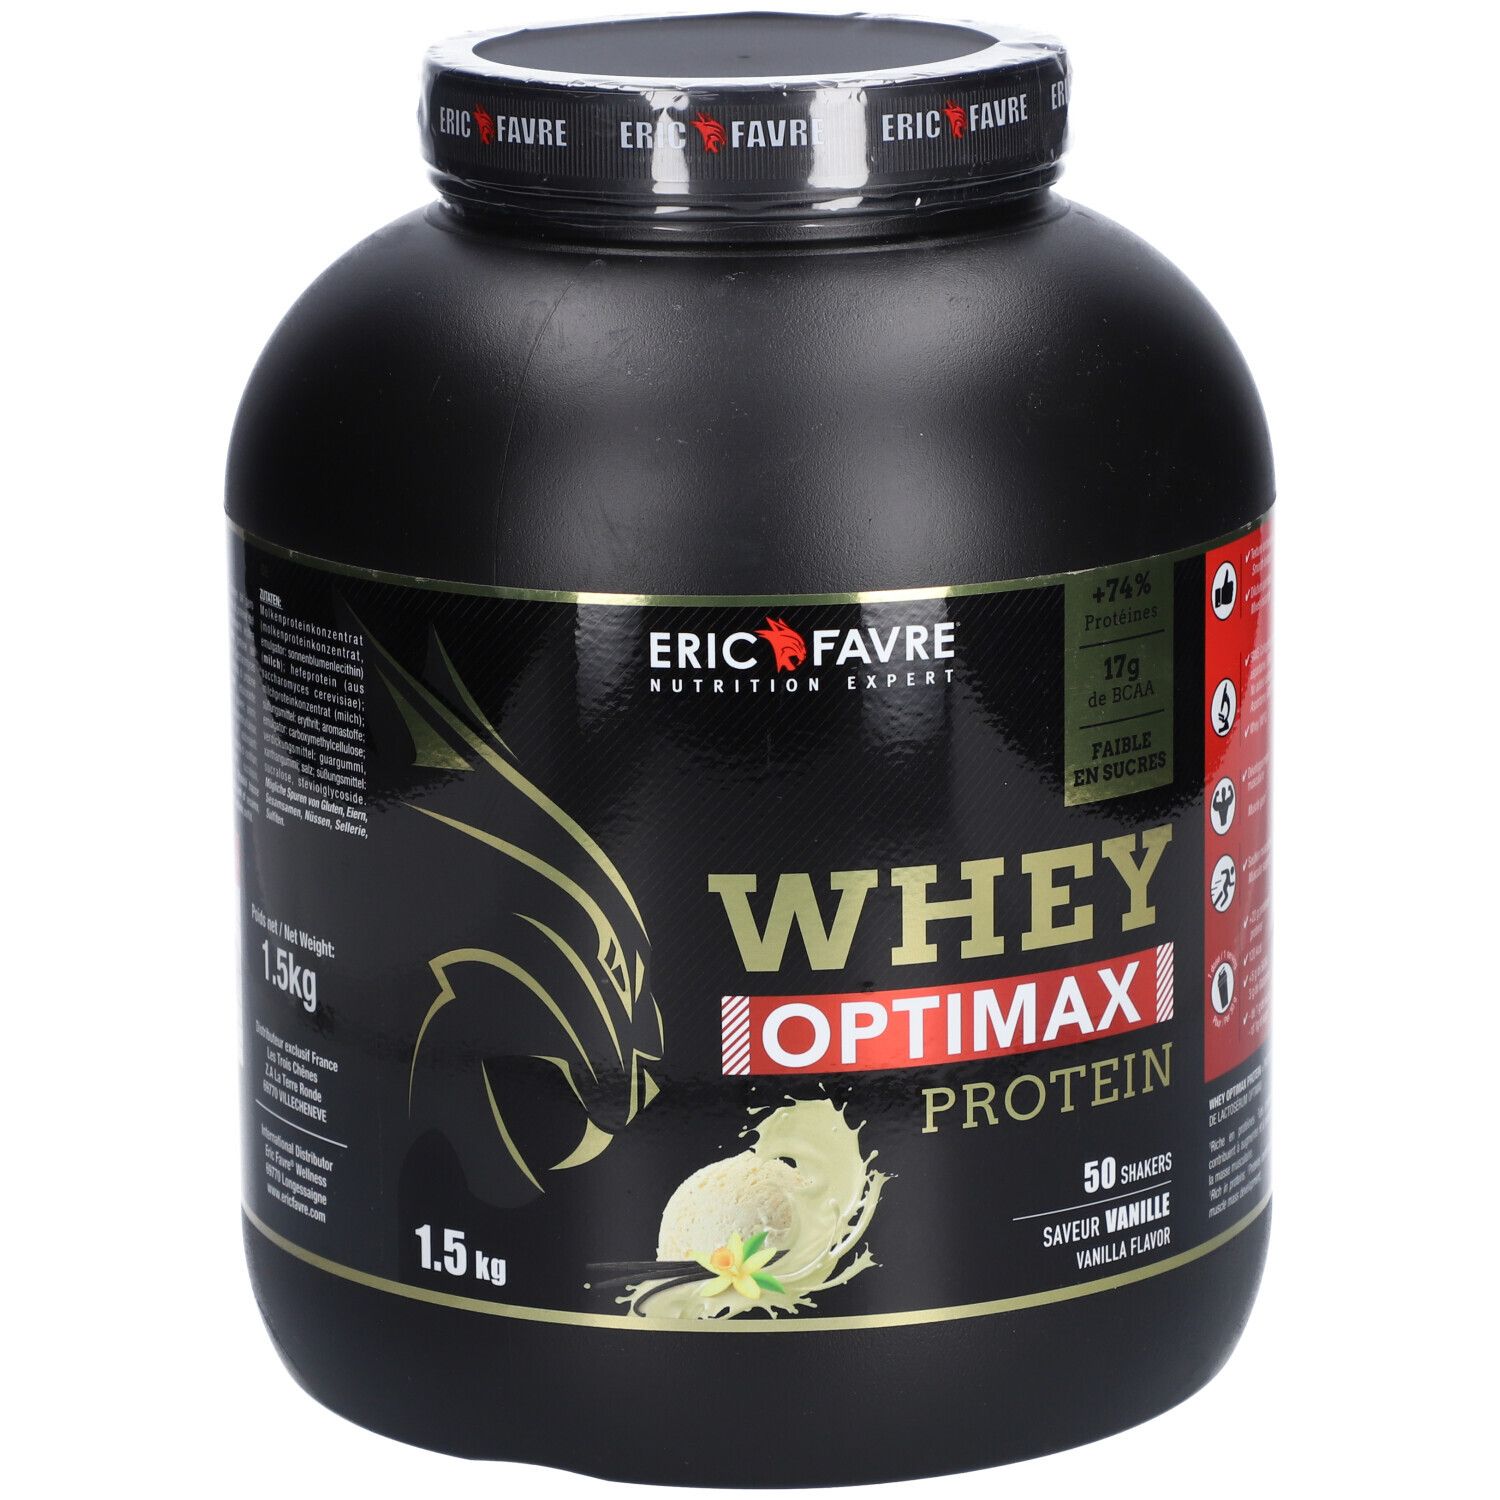 Eric Favre Whey Optimax Protéines saveur Vanille